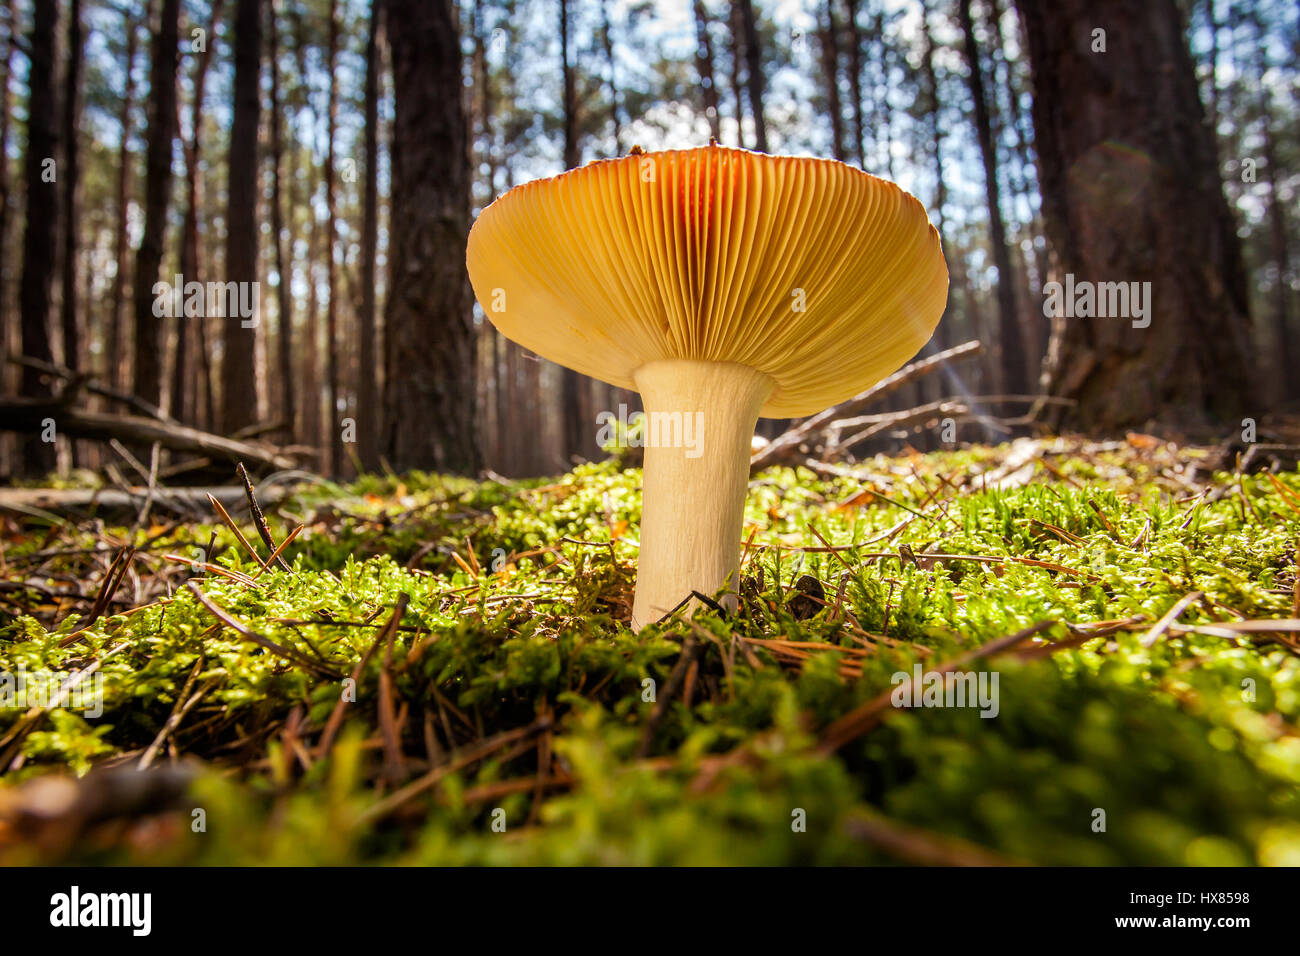 Very nice detail of a well lit mushroom wide angle shot Stock Photo - Alamy